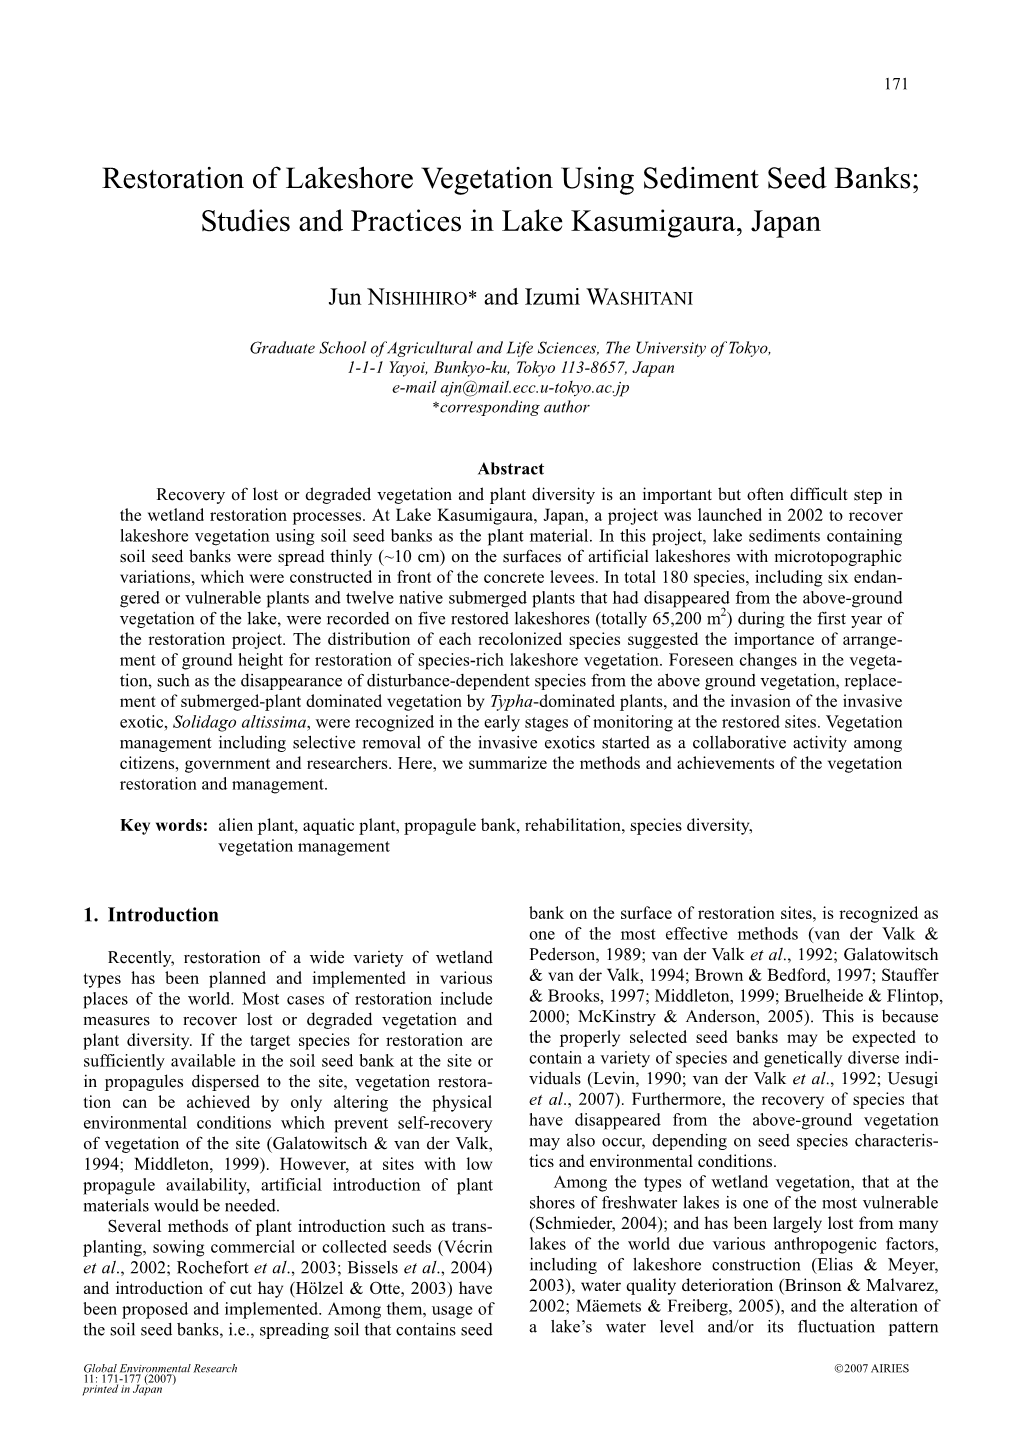 Restoration of Lakeshore Vegetation Using Sediment Seed Banks; Studies and Practices in Lake Kasumigaura, Japan